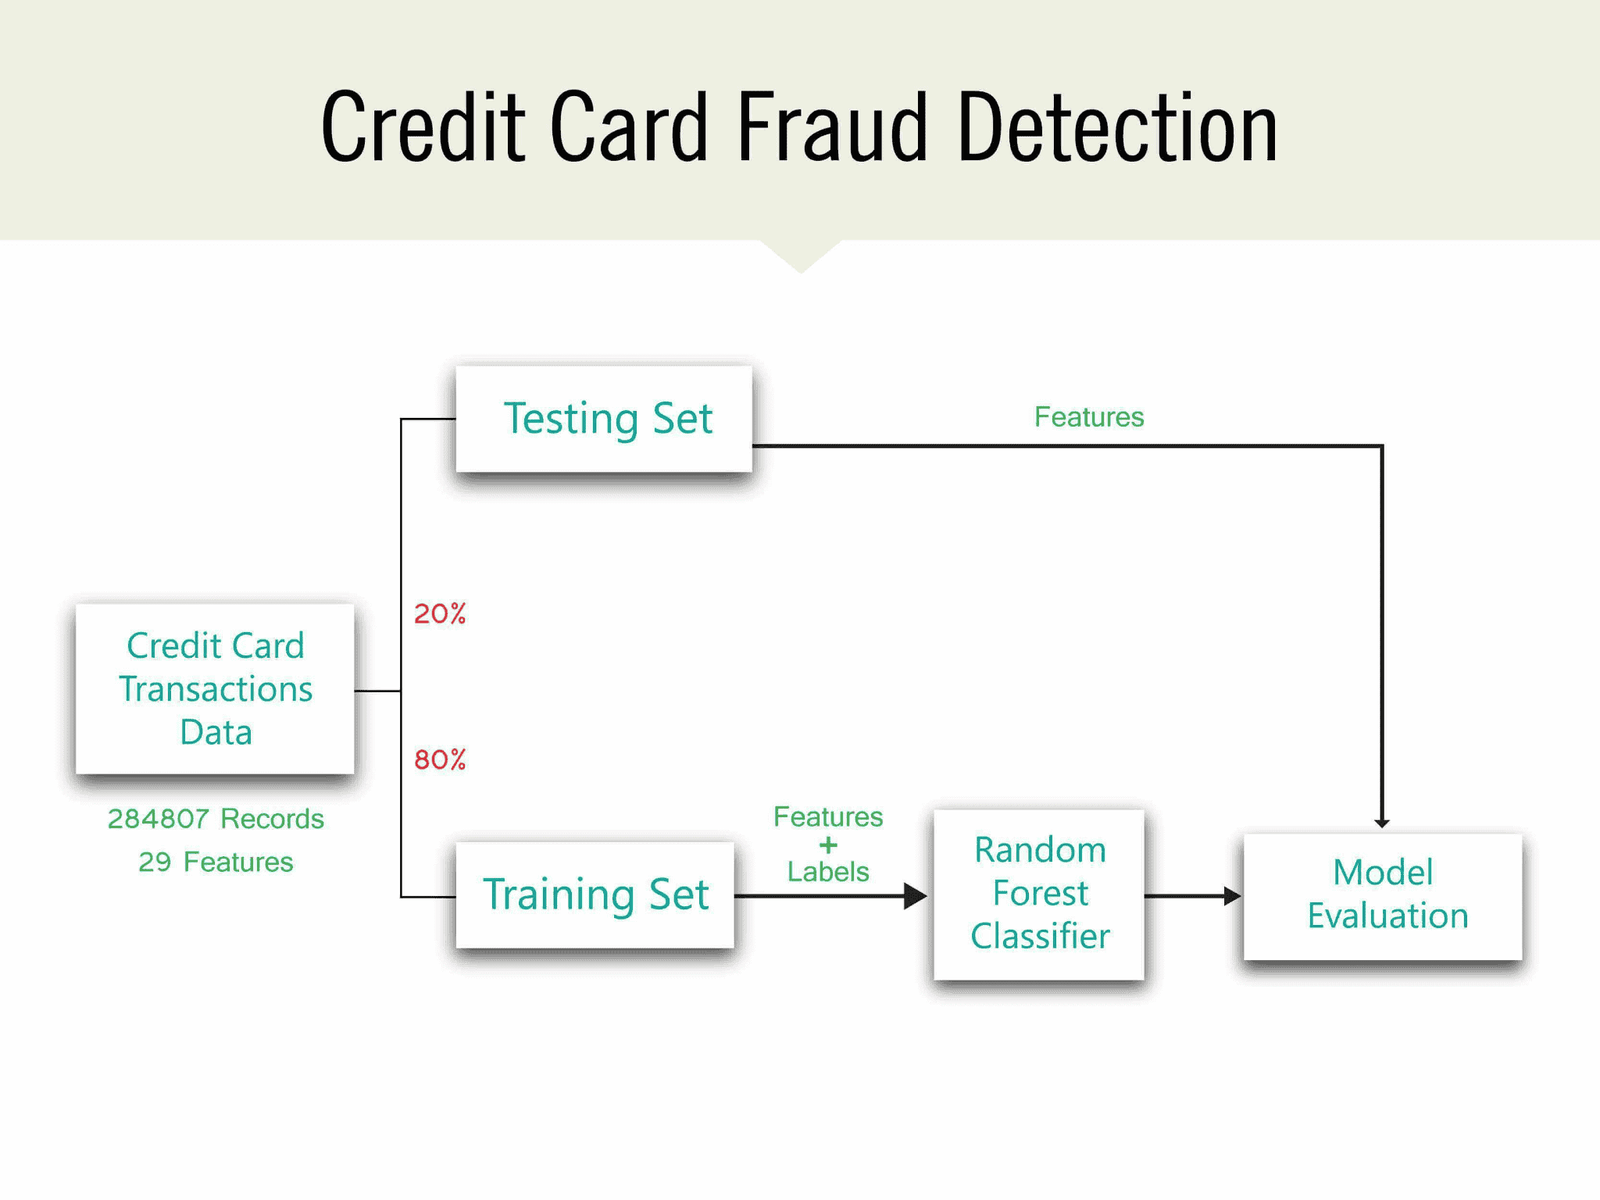 Credit Card fraud